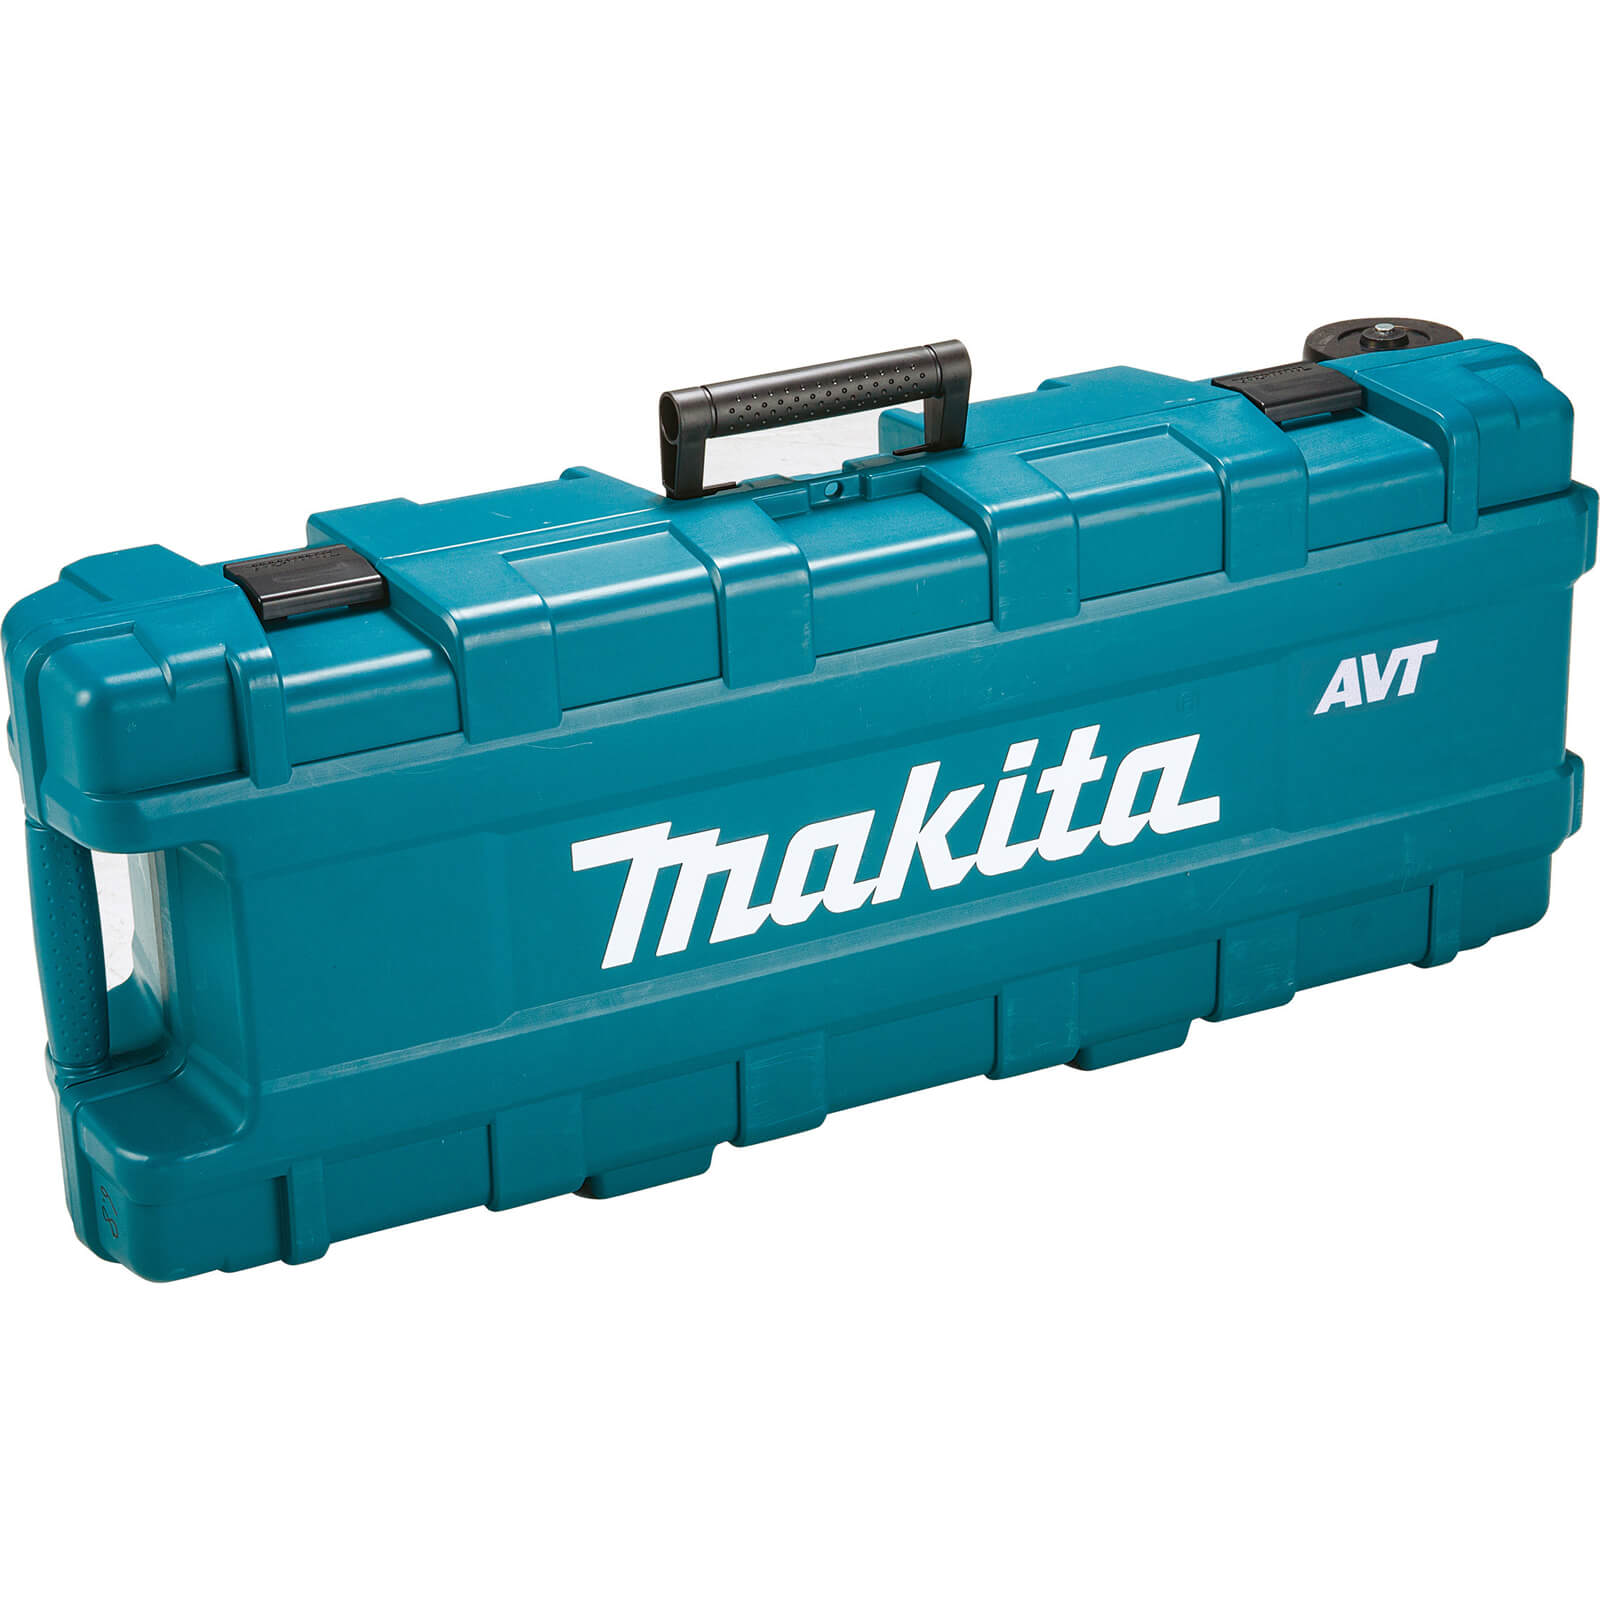 Photos - Tool Box Makita Plastic Carry Case for HM1511C Demolition Breaker 821836-2 